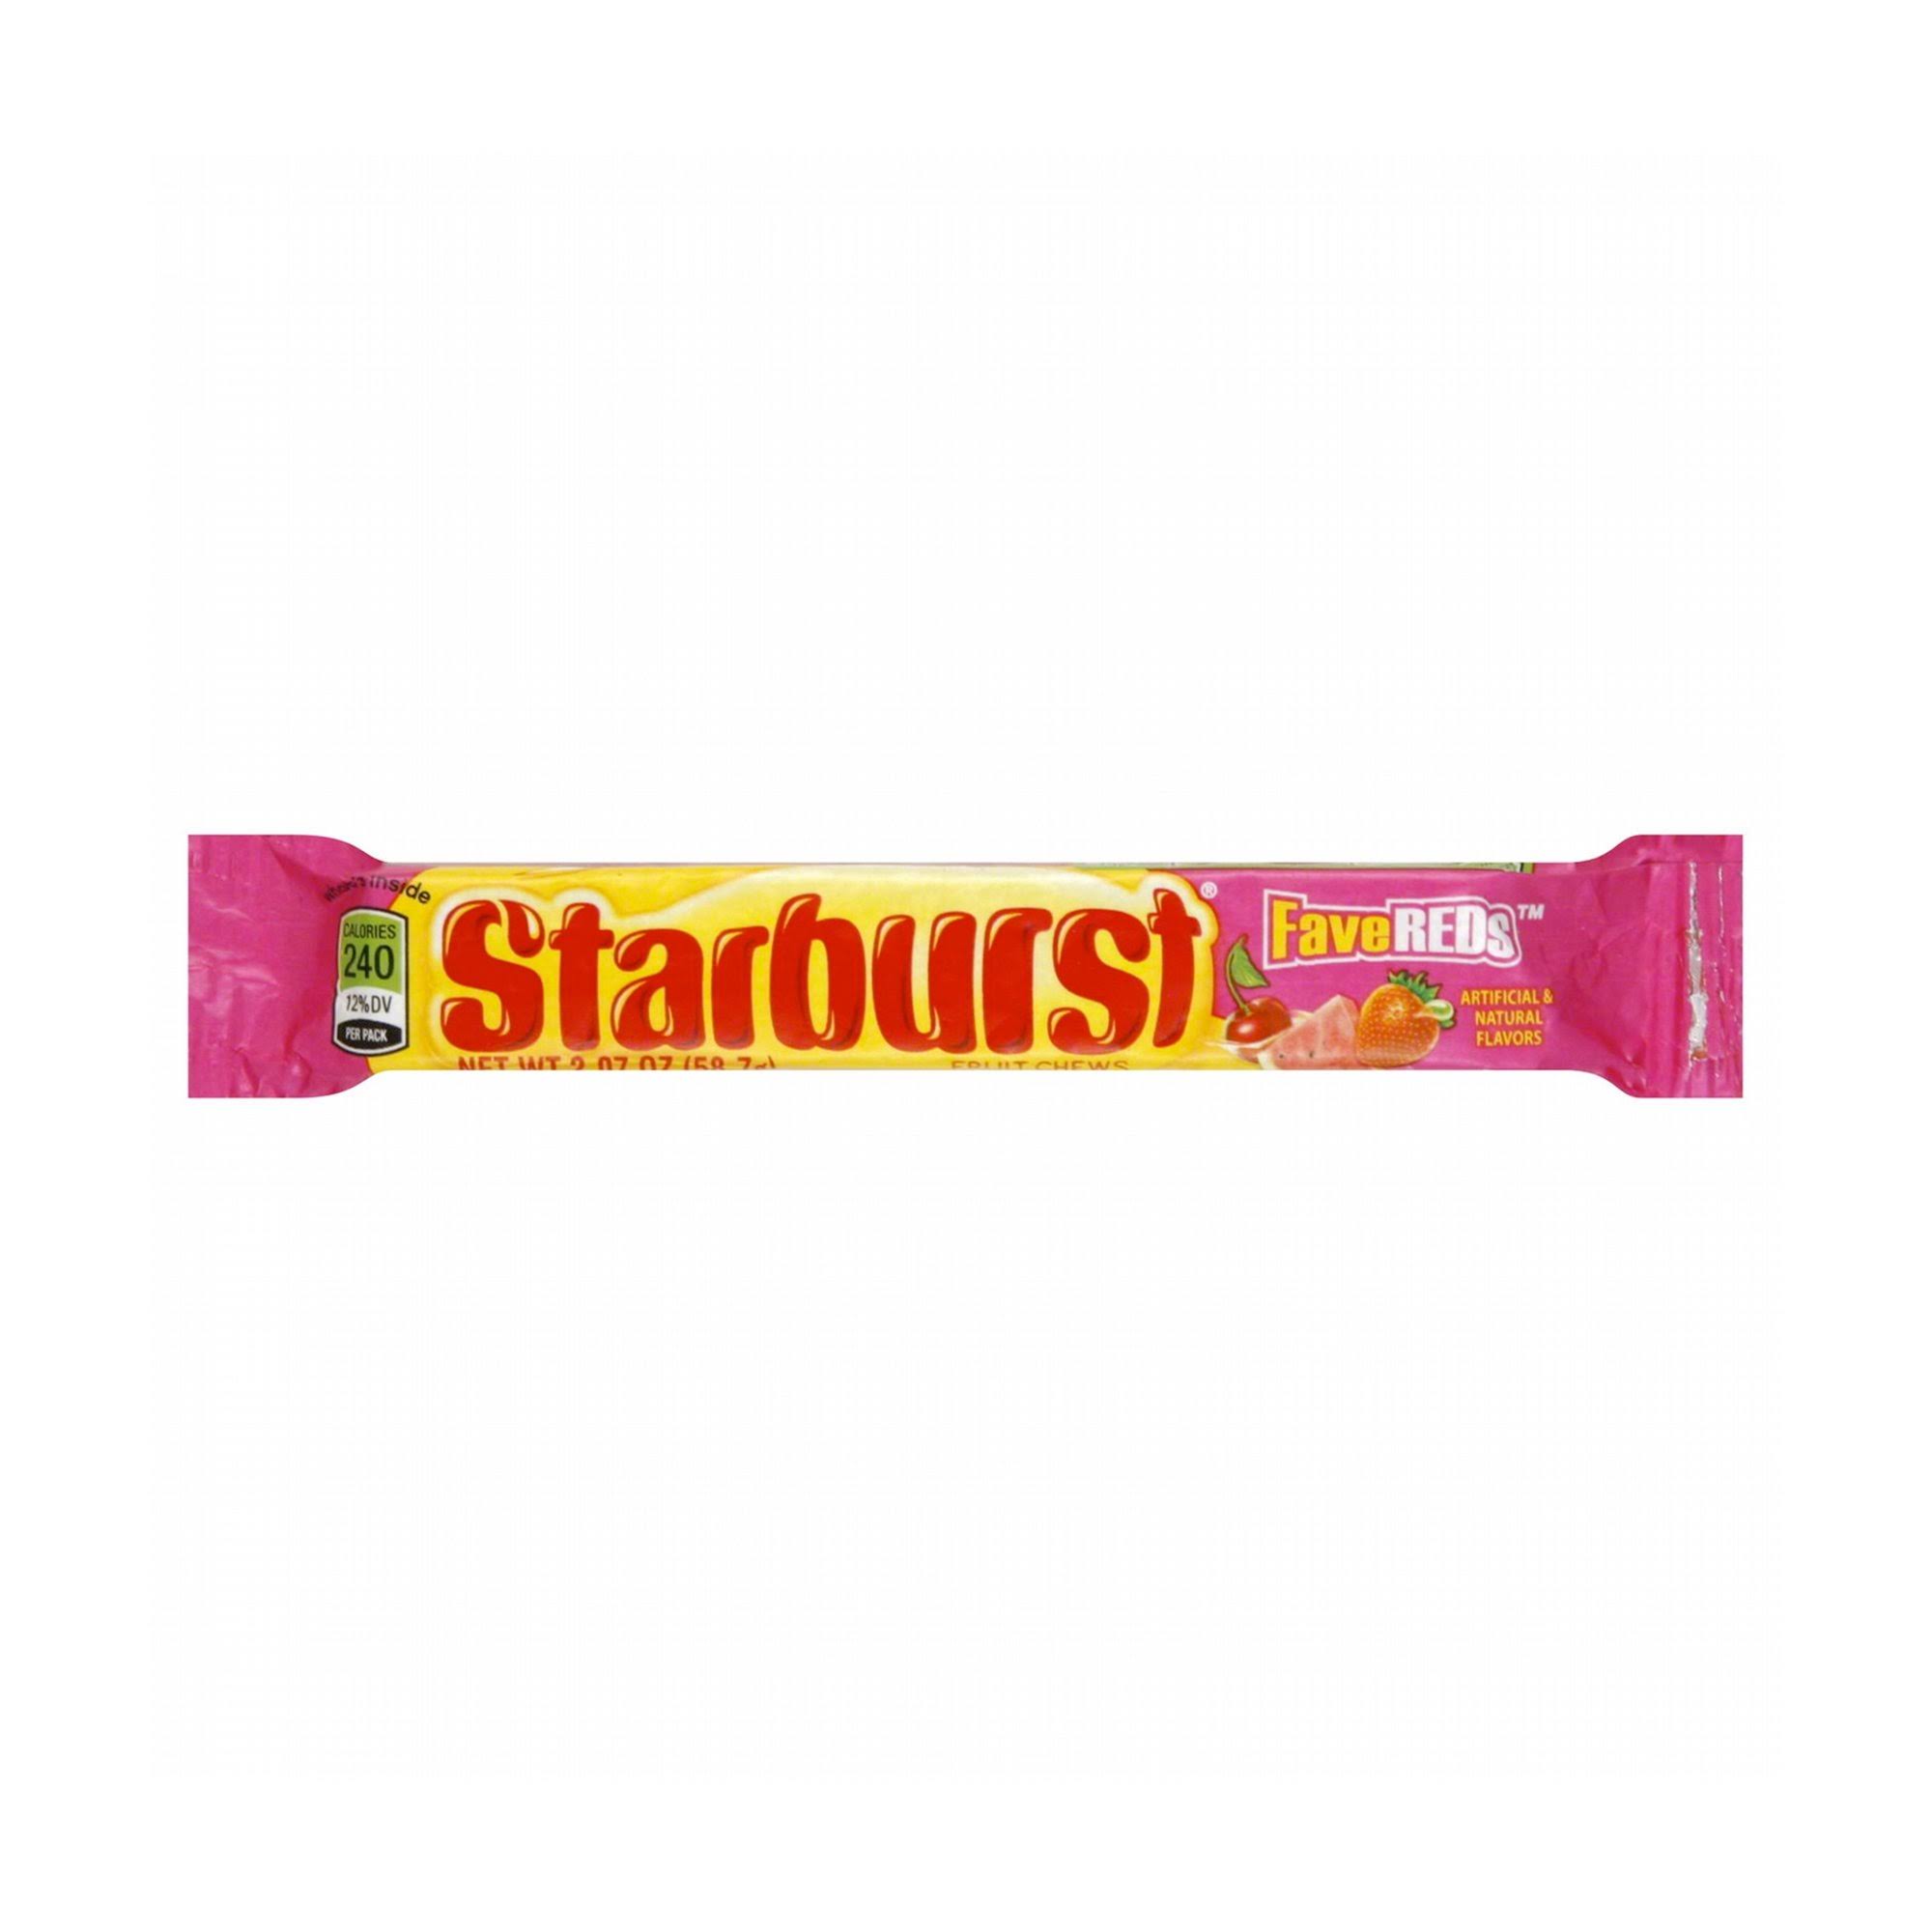 Starburst Fave Reds Fruit Chews